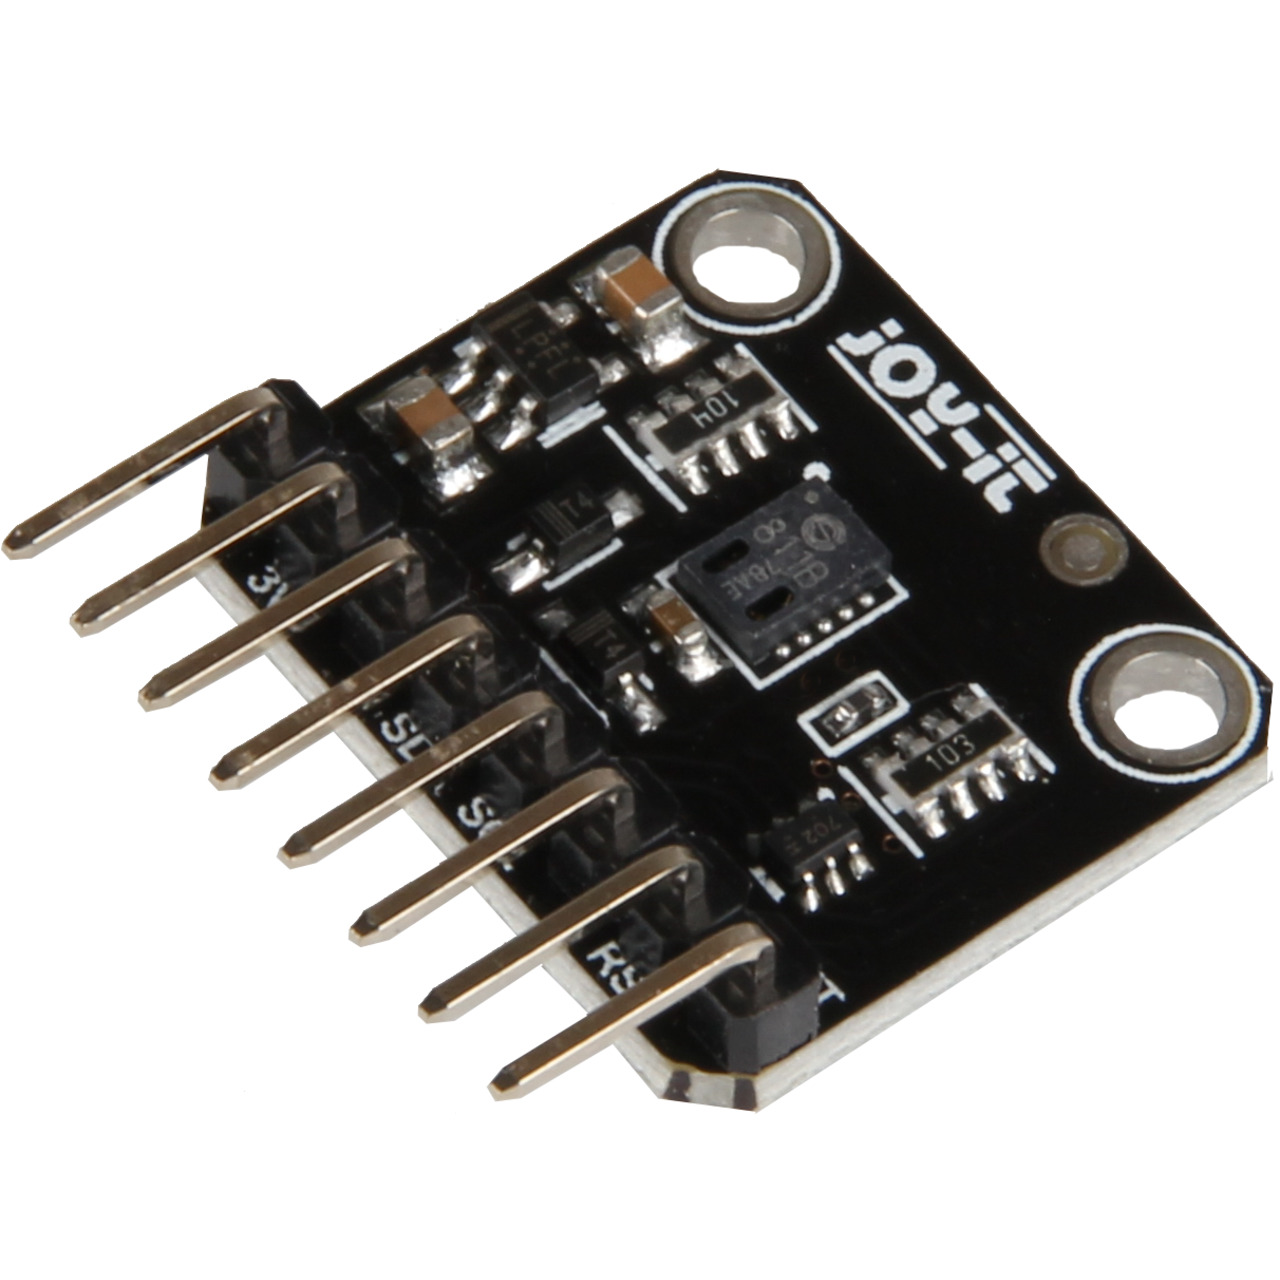 Joy-IT Luftqualittssensor (VOC) mit angeltetenn Pins- I2C- CCS811 Sensor